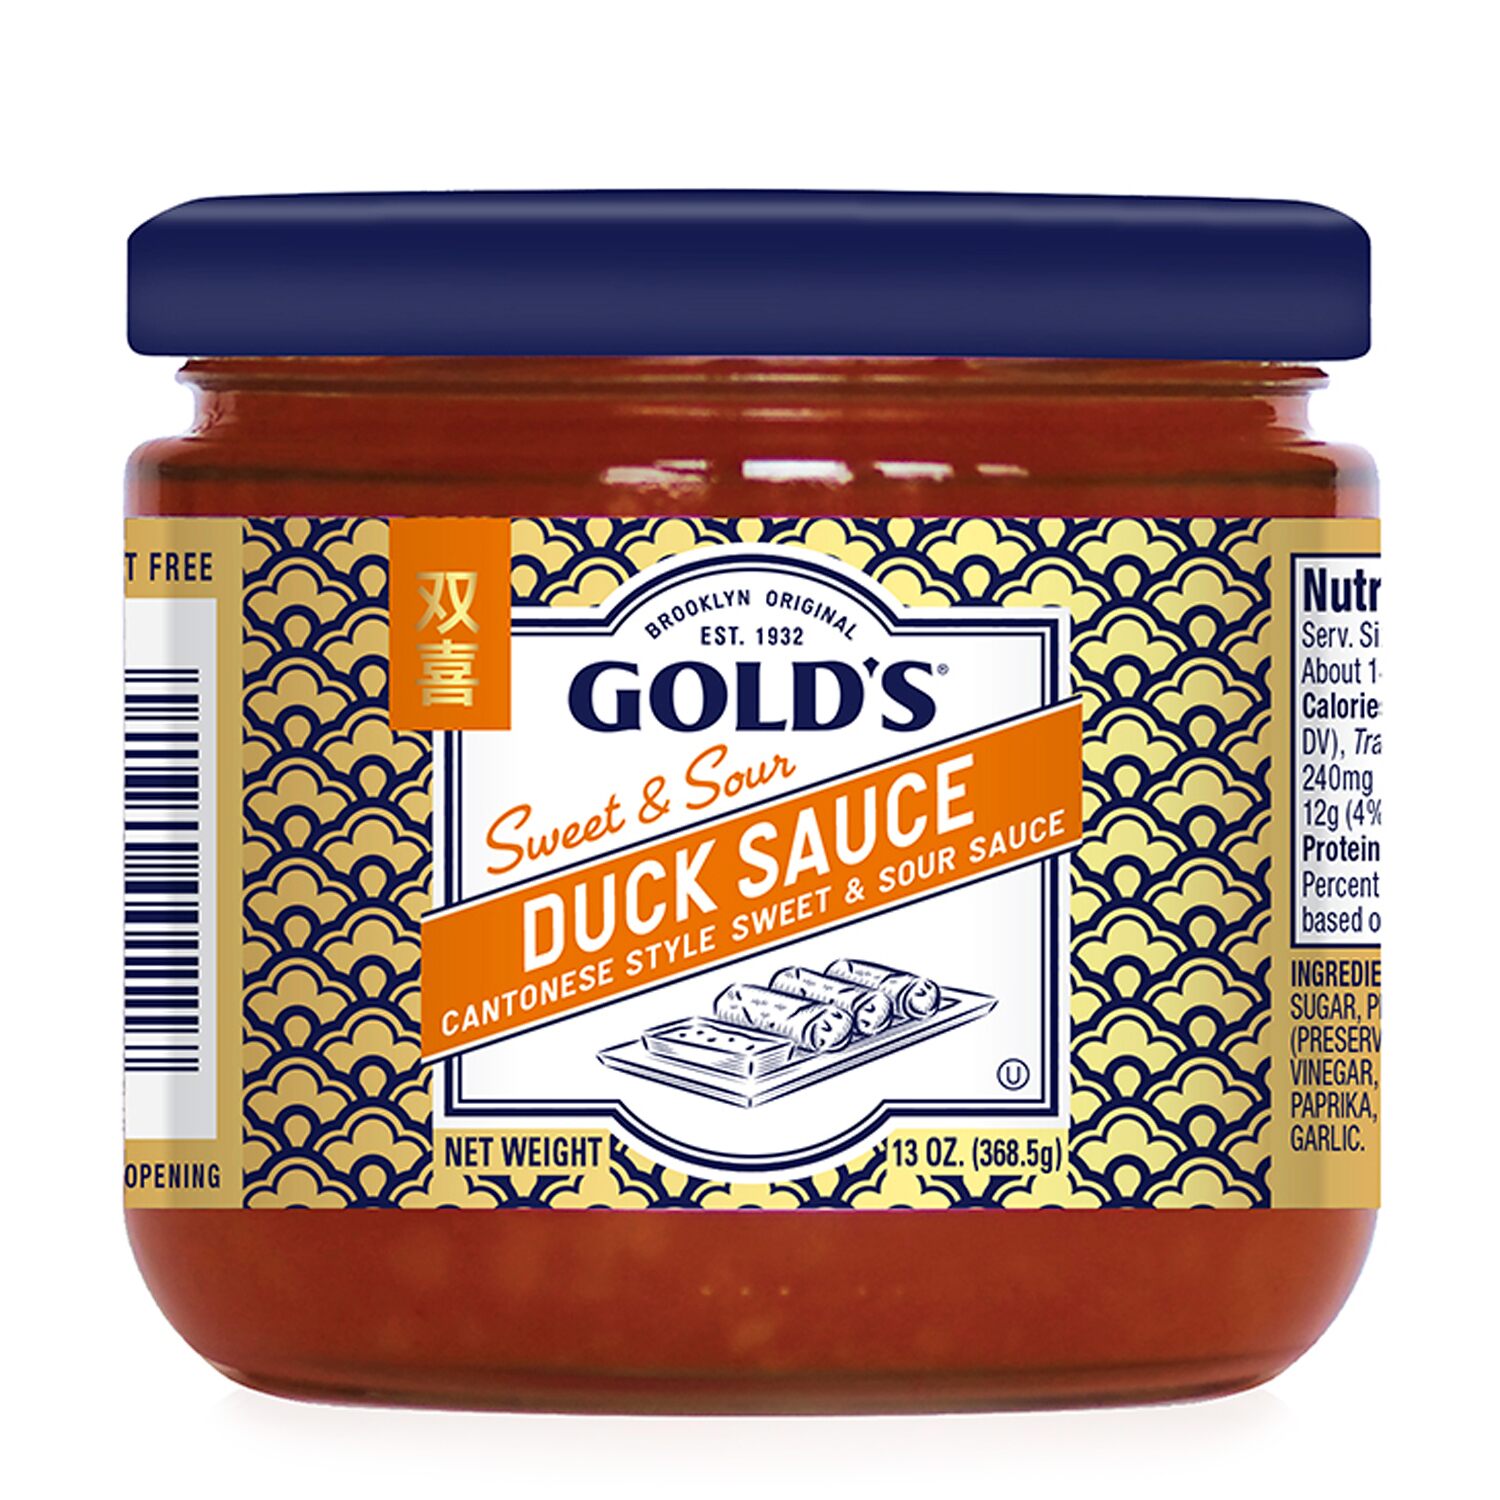 Gold's Cantonese Sweet & Sour Duck Sauce 14 oz